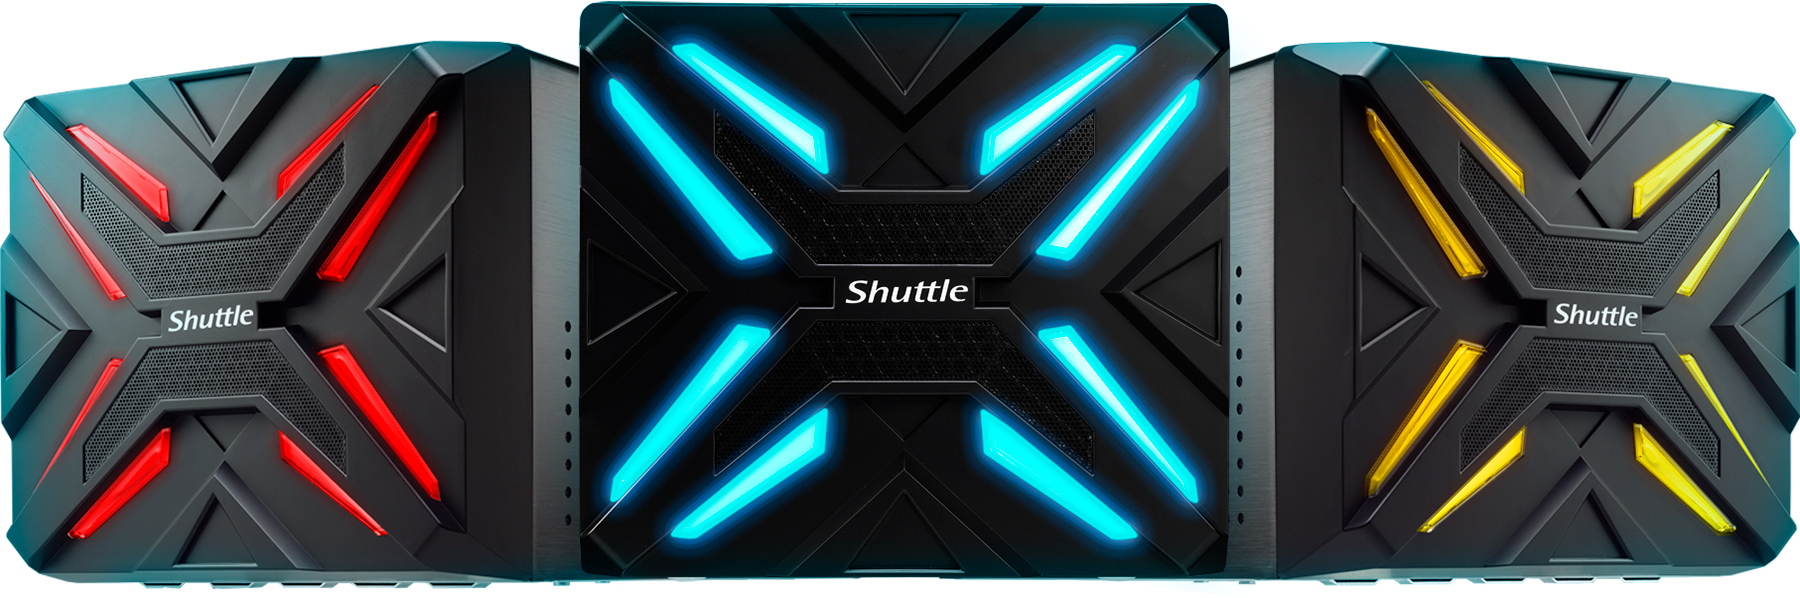 Shuttle XPC Gaming Cube SZ270R9, Intel Kabylake/Skylake Z270 LGA1151 i3/i5/i7/Pentium, Three Display Output, PCI-E x16/x4